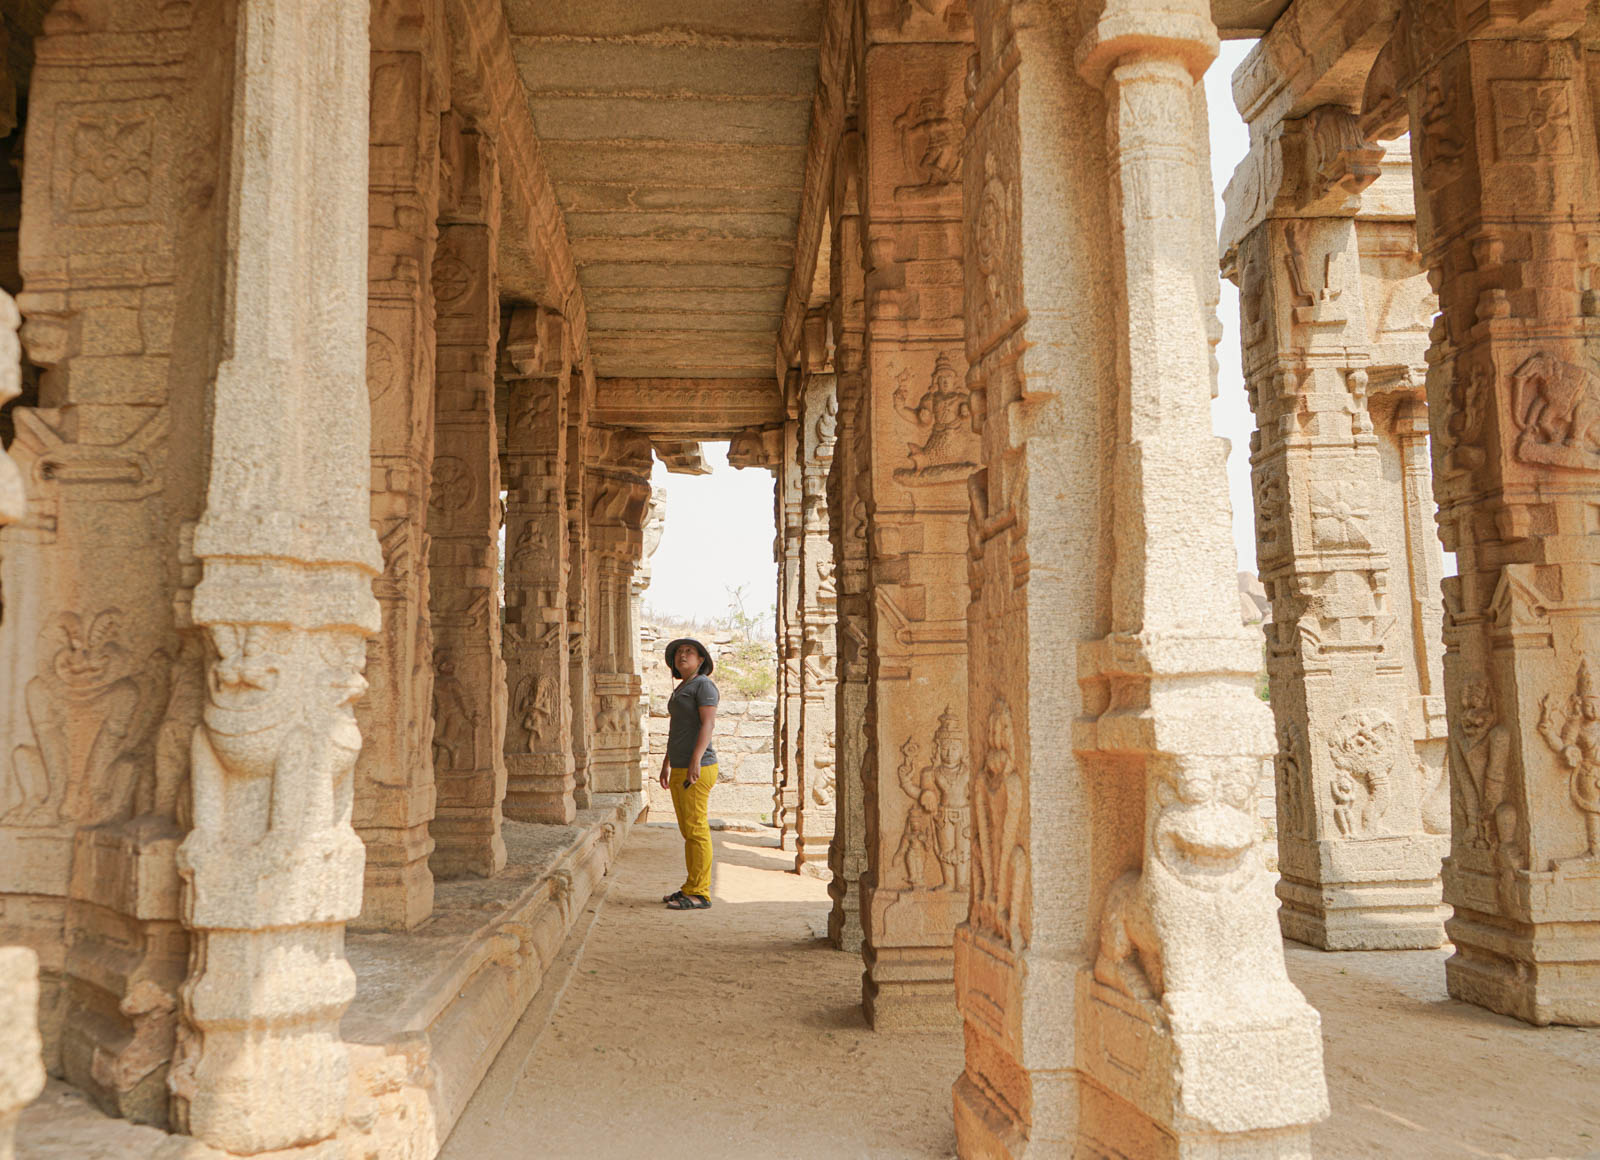 Examining temple columns